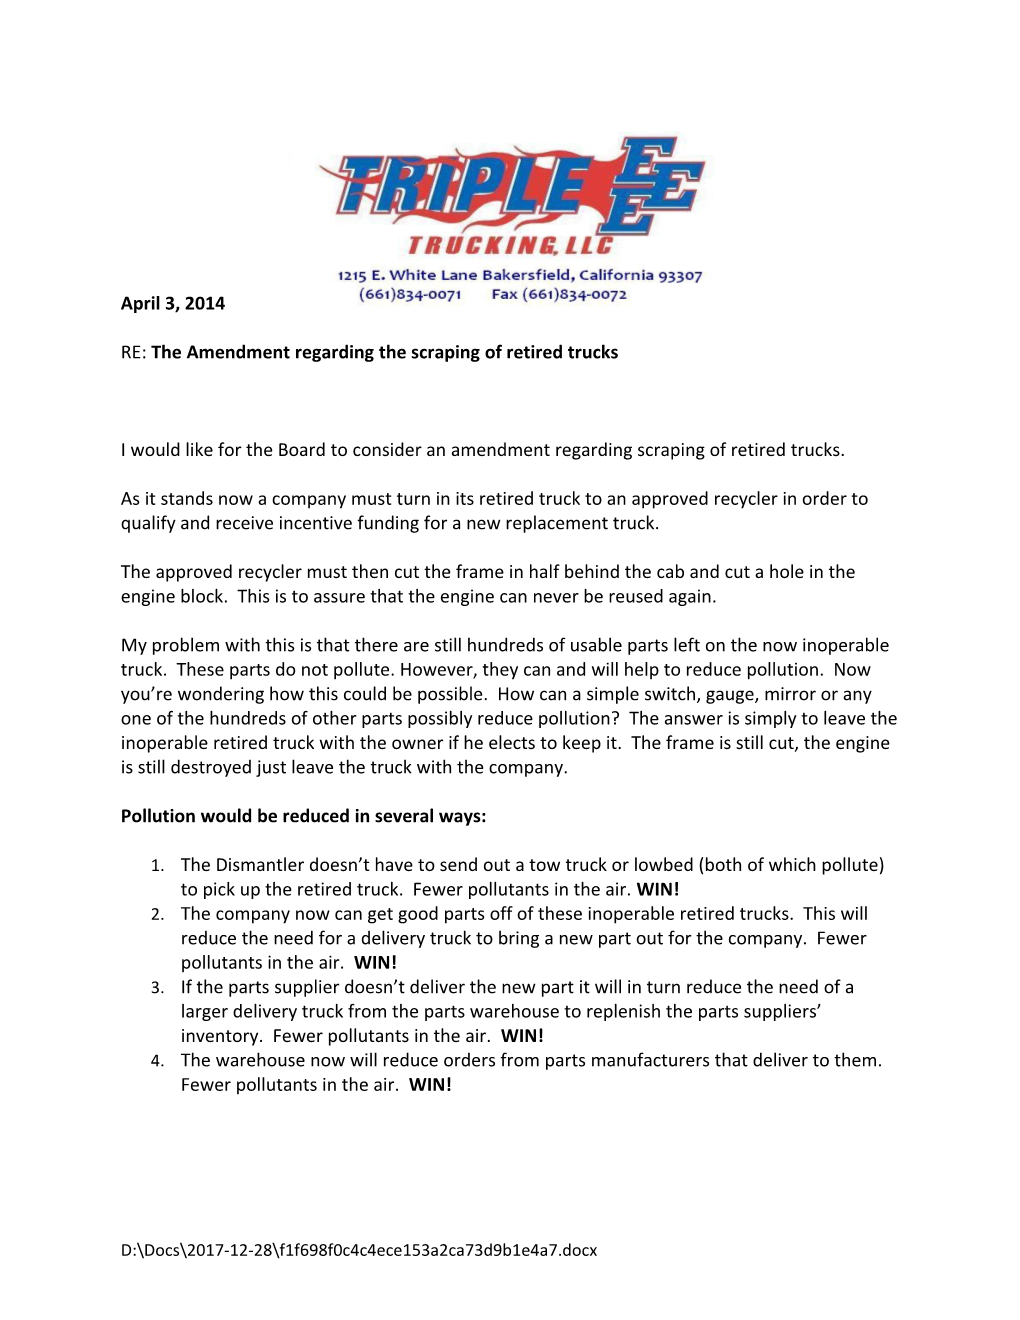 RE: the Amendment Regarding the Scraping of Retired Trucks